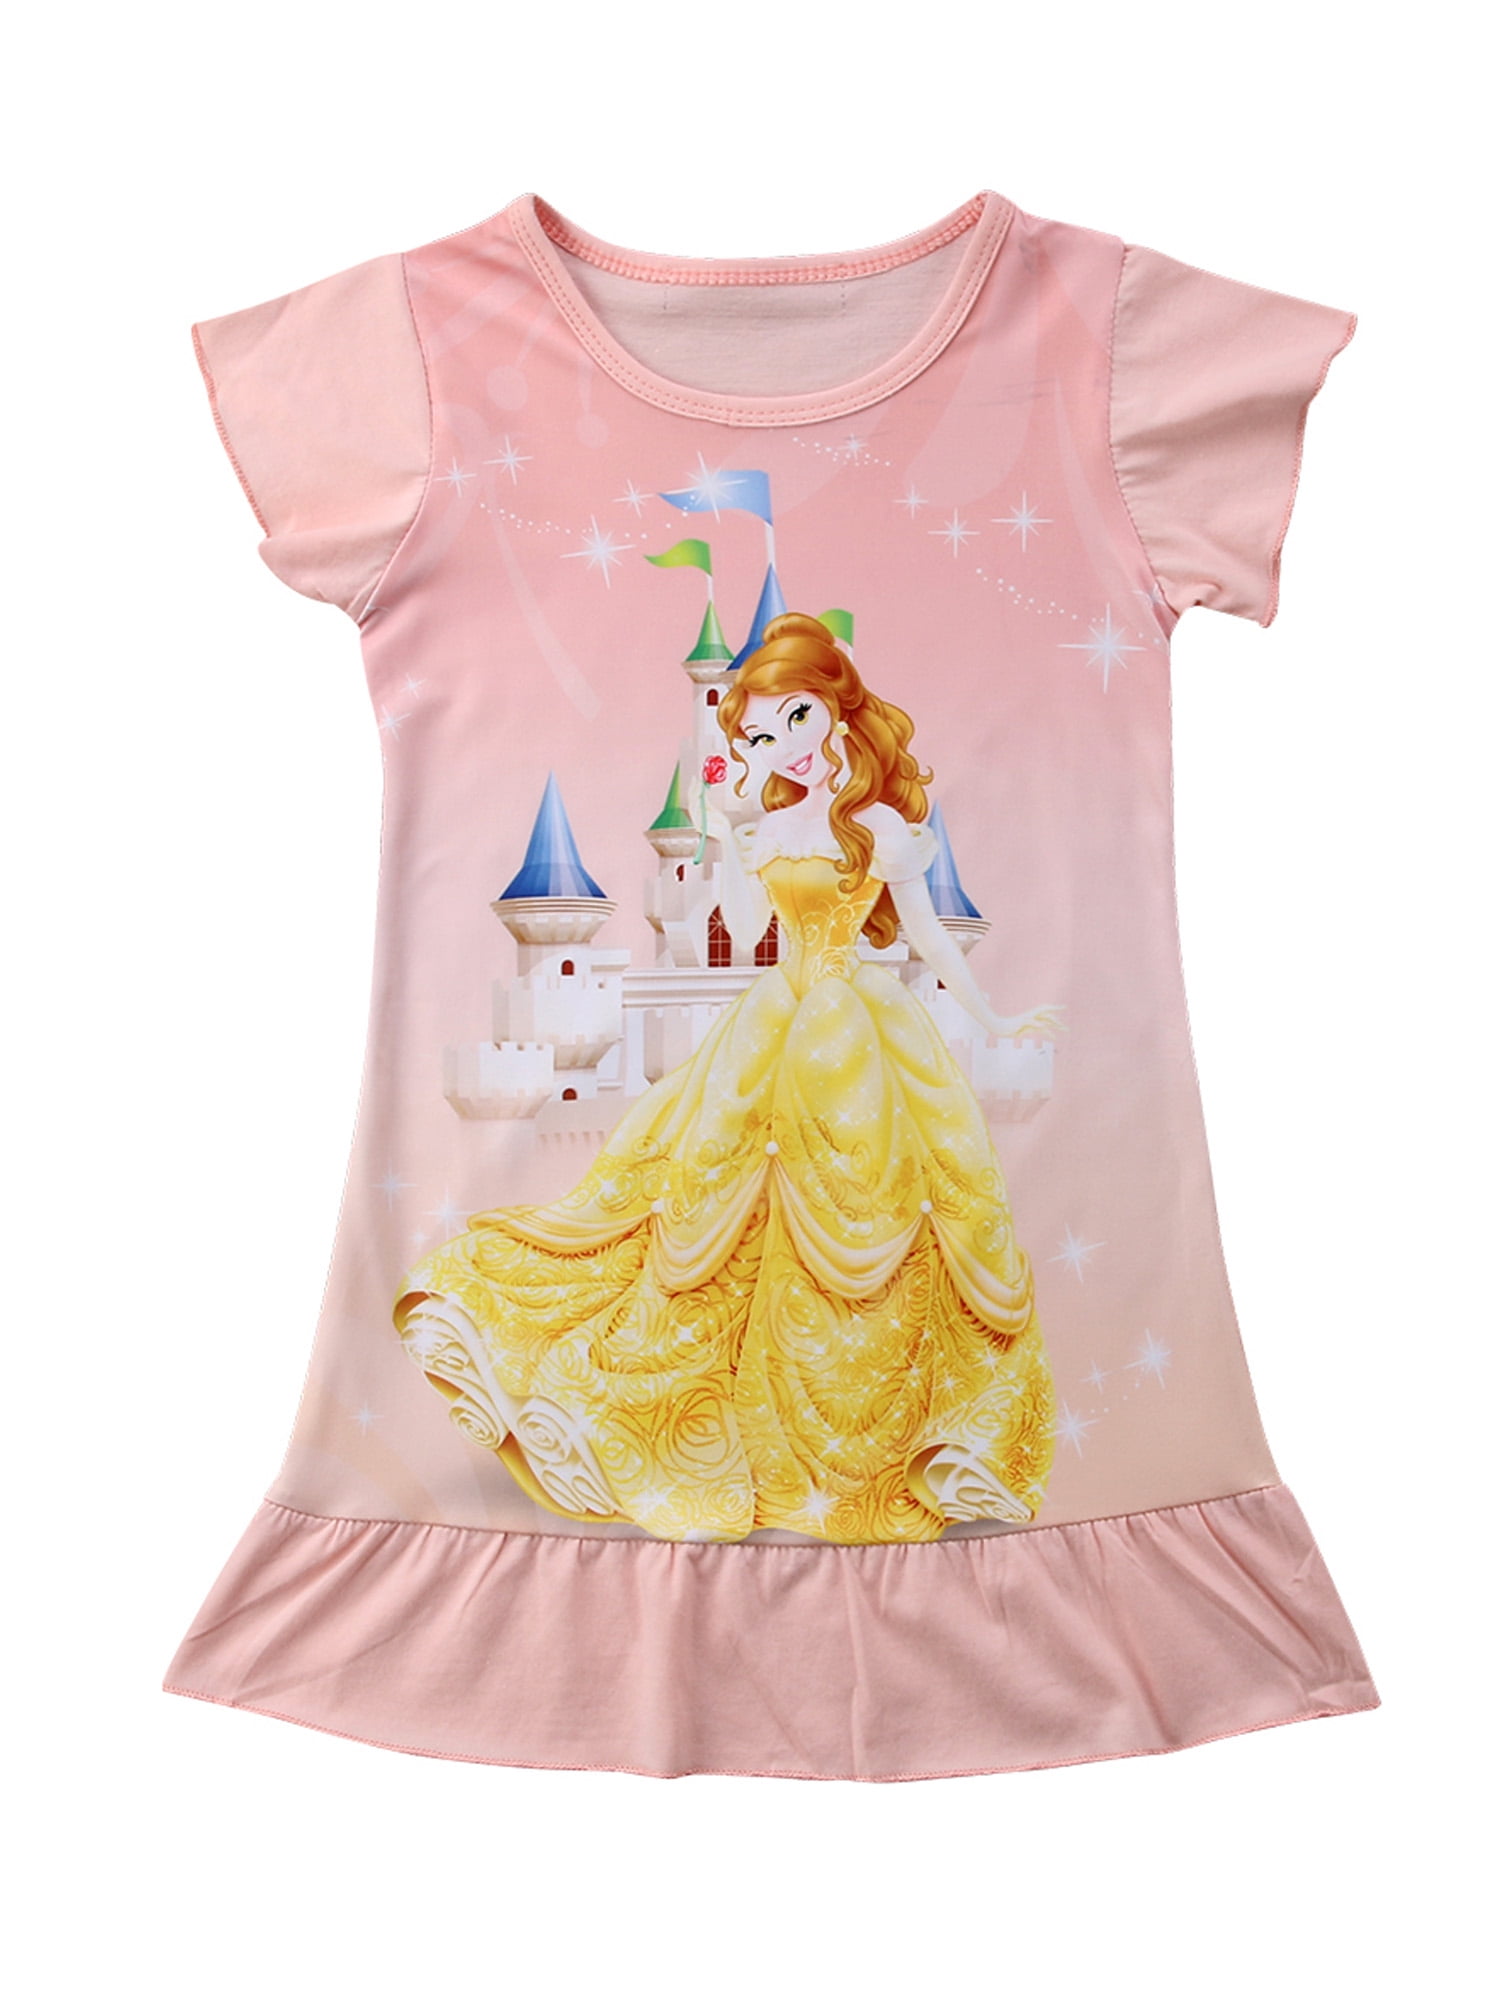 WNQY Toddler Girls Baby Princess Pajamas Shark Cartoon Print Nightgown Dress